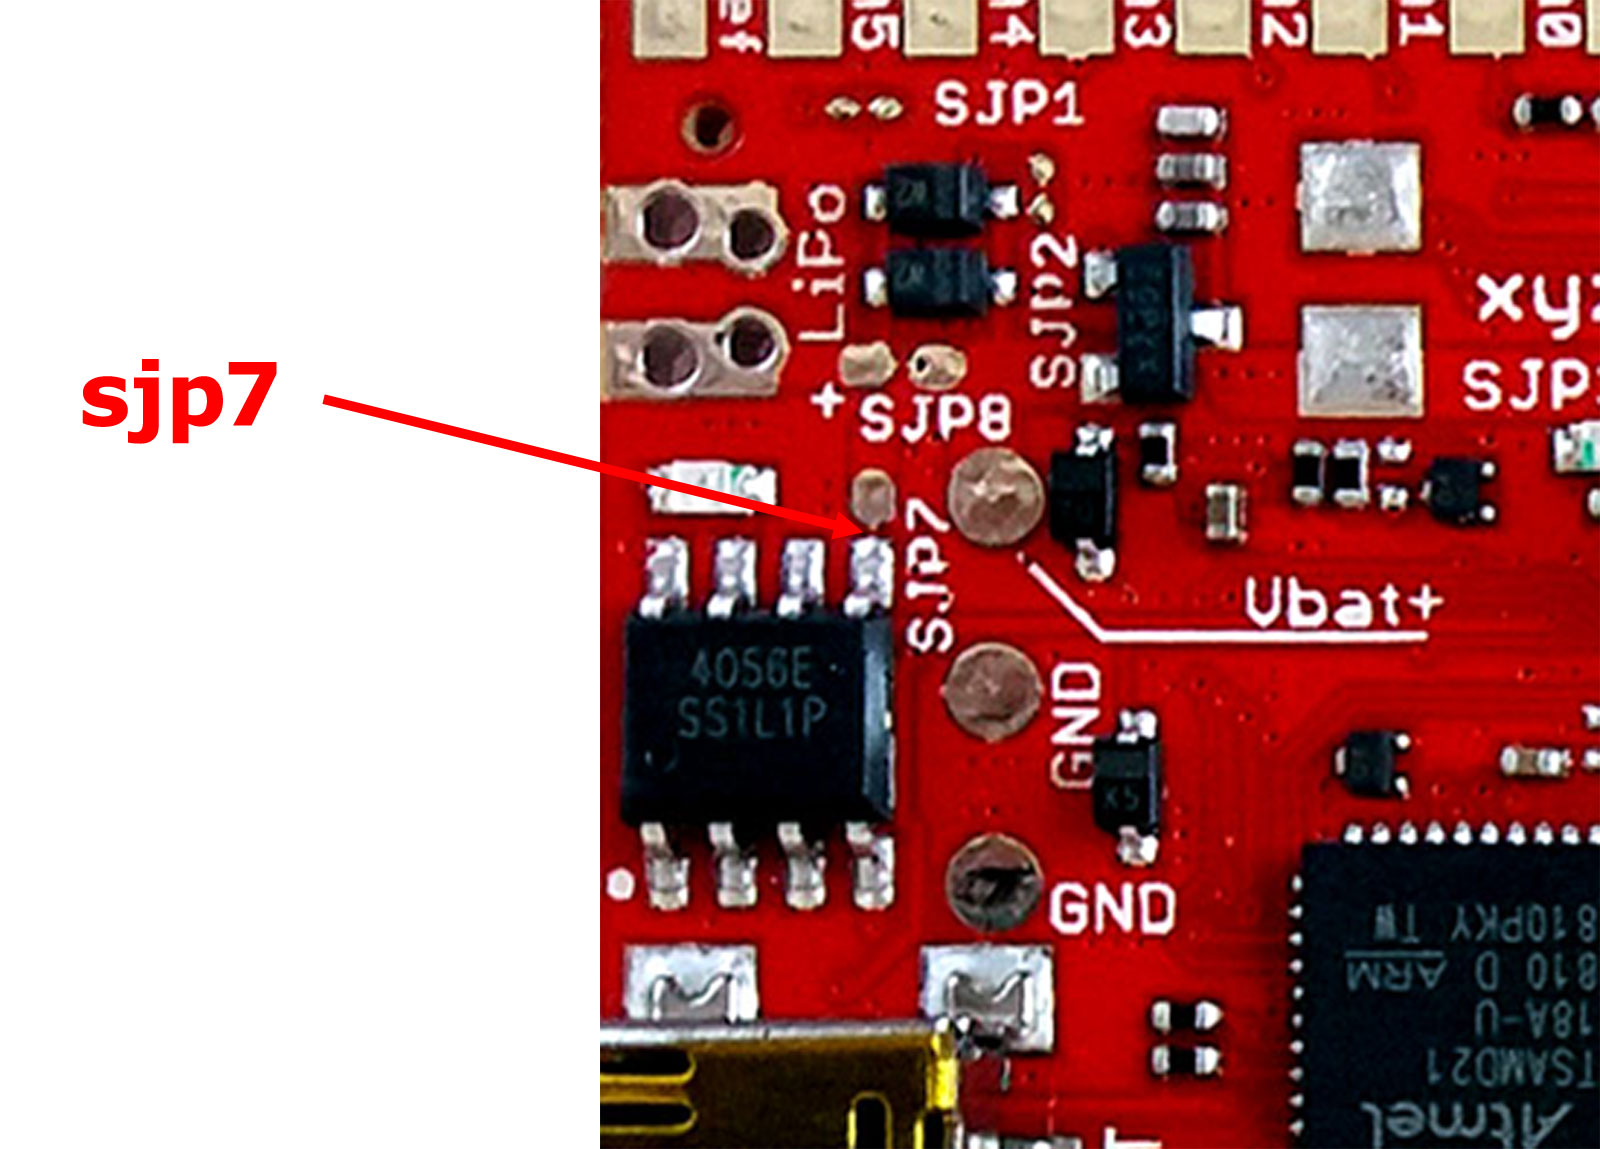 xyz-mIoT shield soldering jumper SJP7 detail